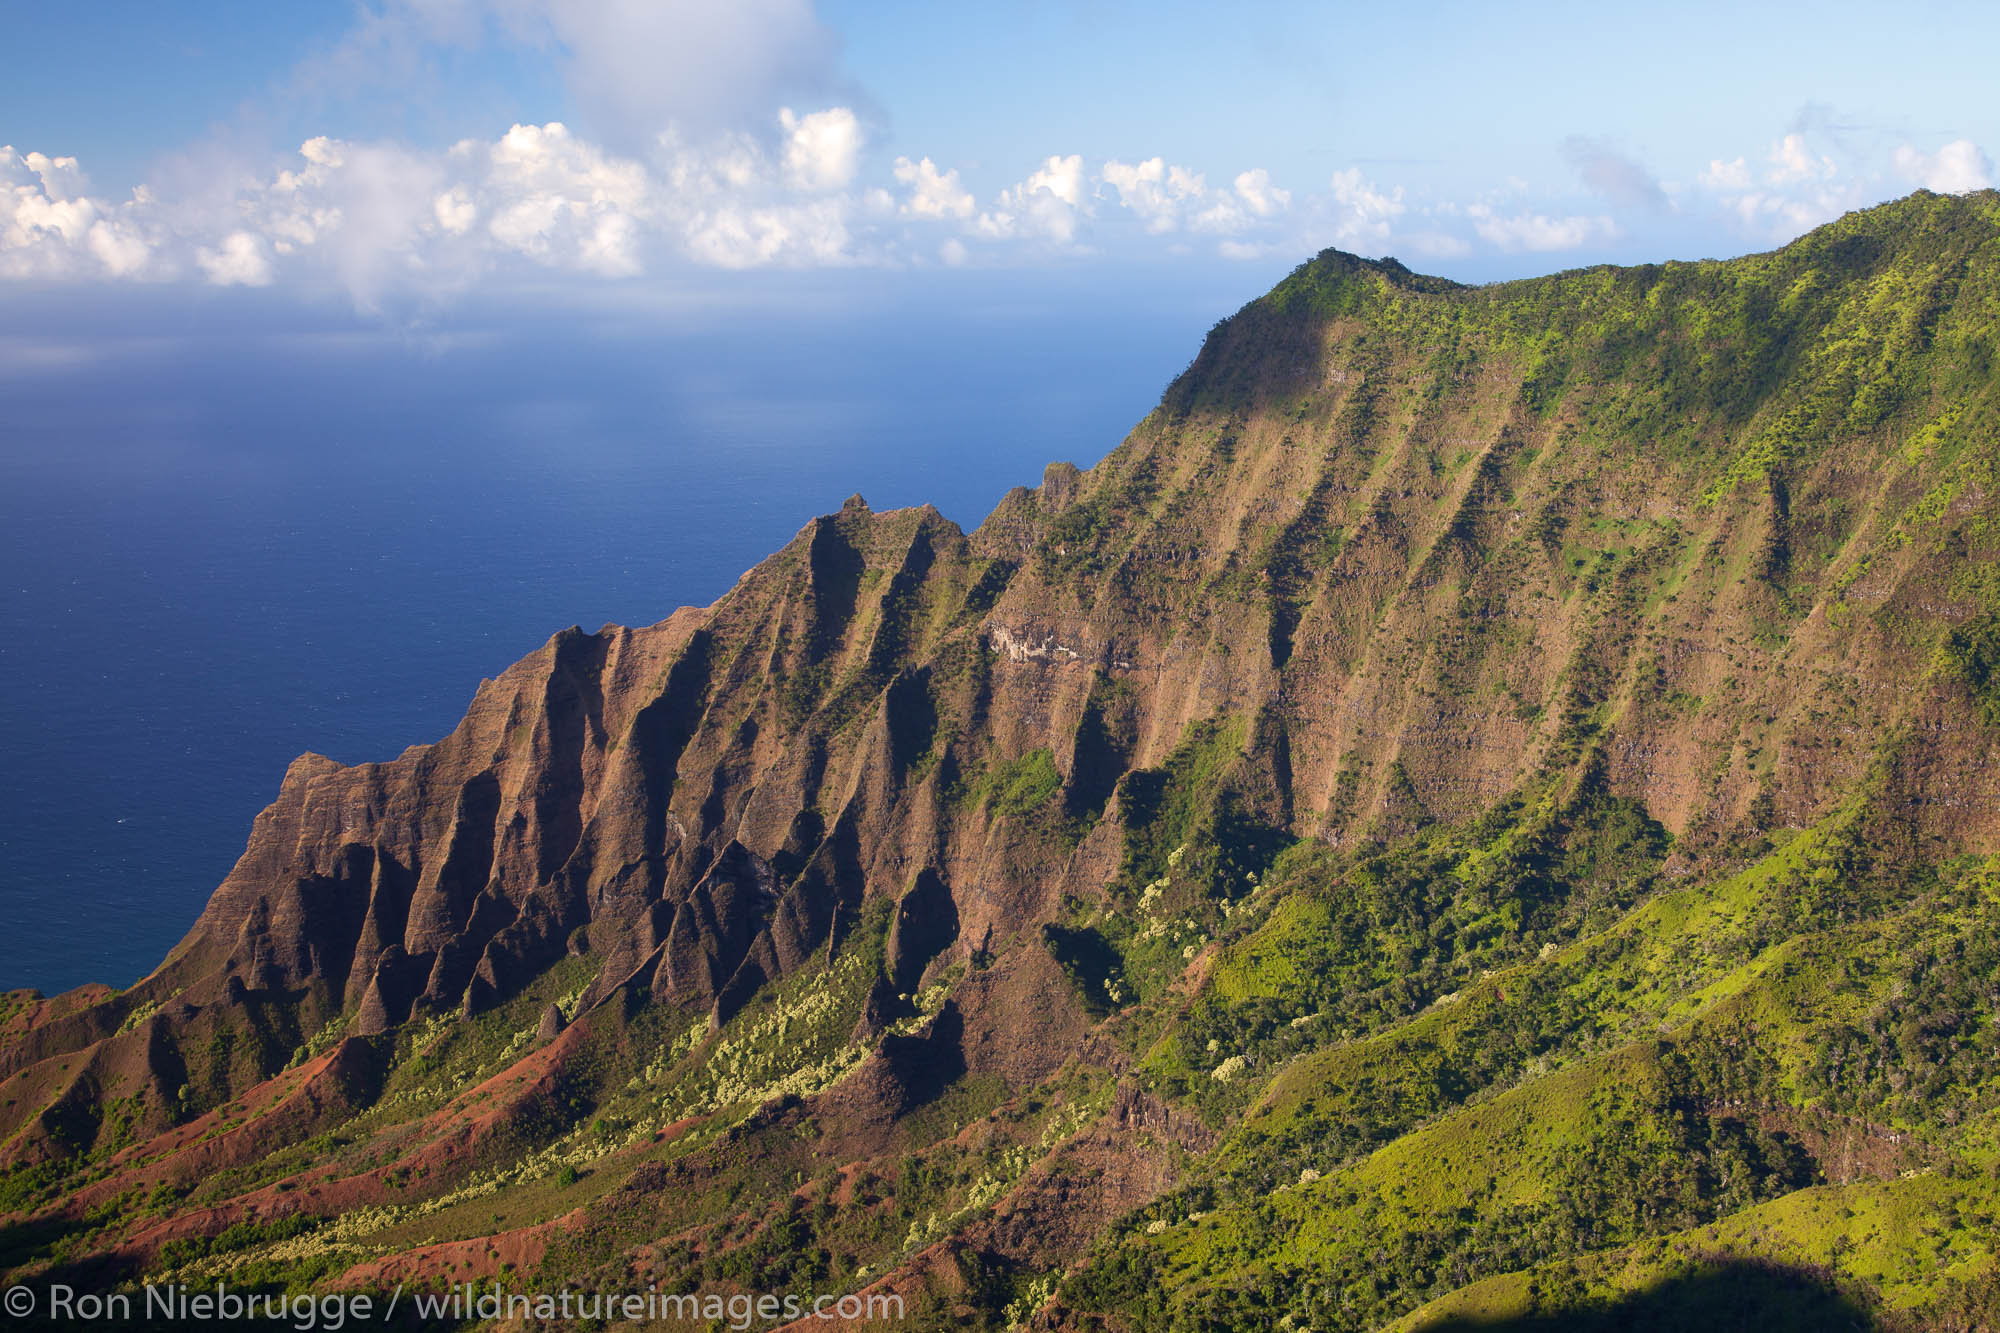 The Kalalau Valley of the Na Pali Coast, Kauai, Hawaii.